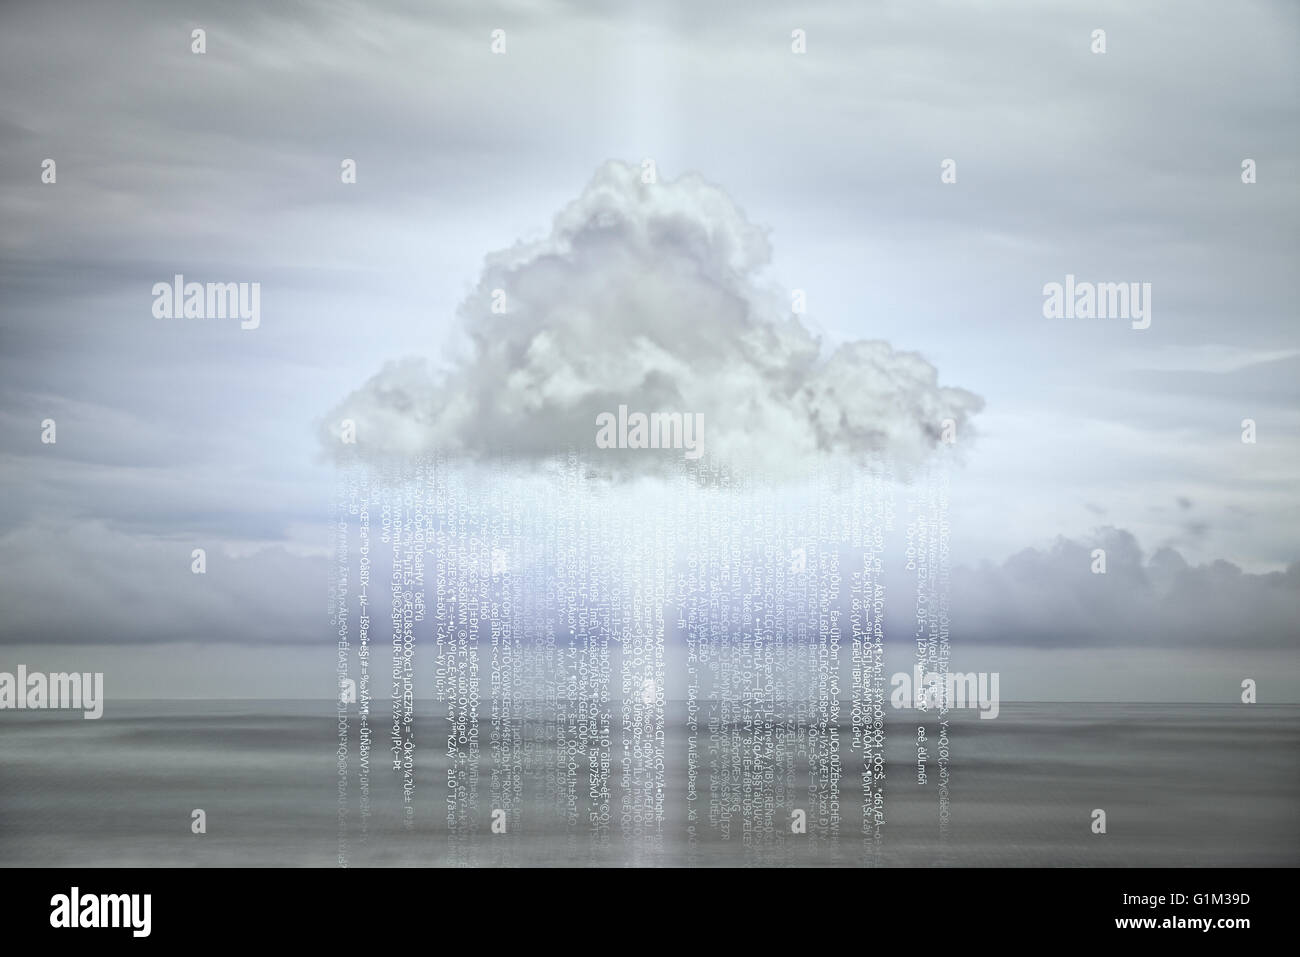 Data raining from cloud Stock Photo